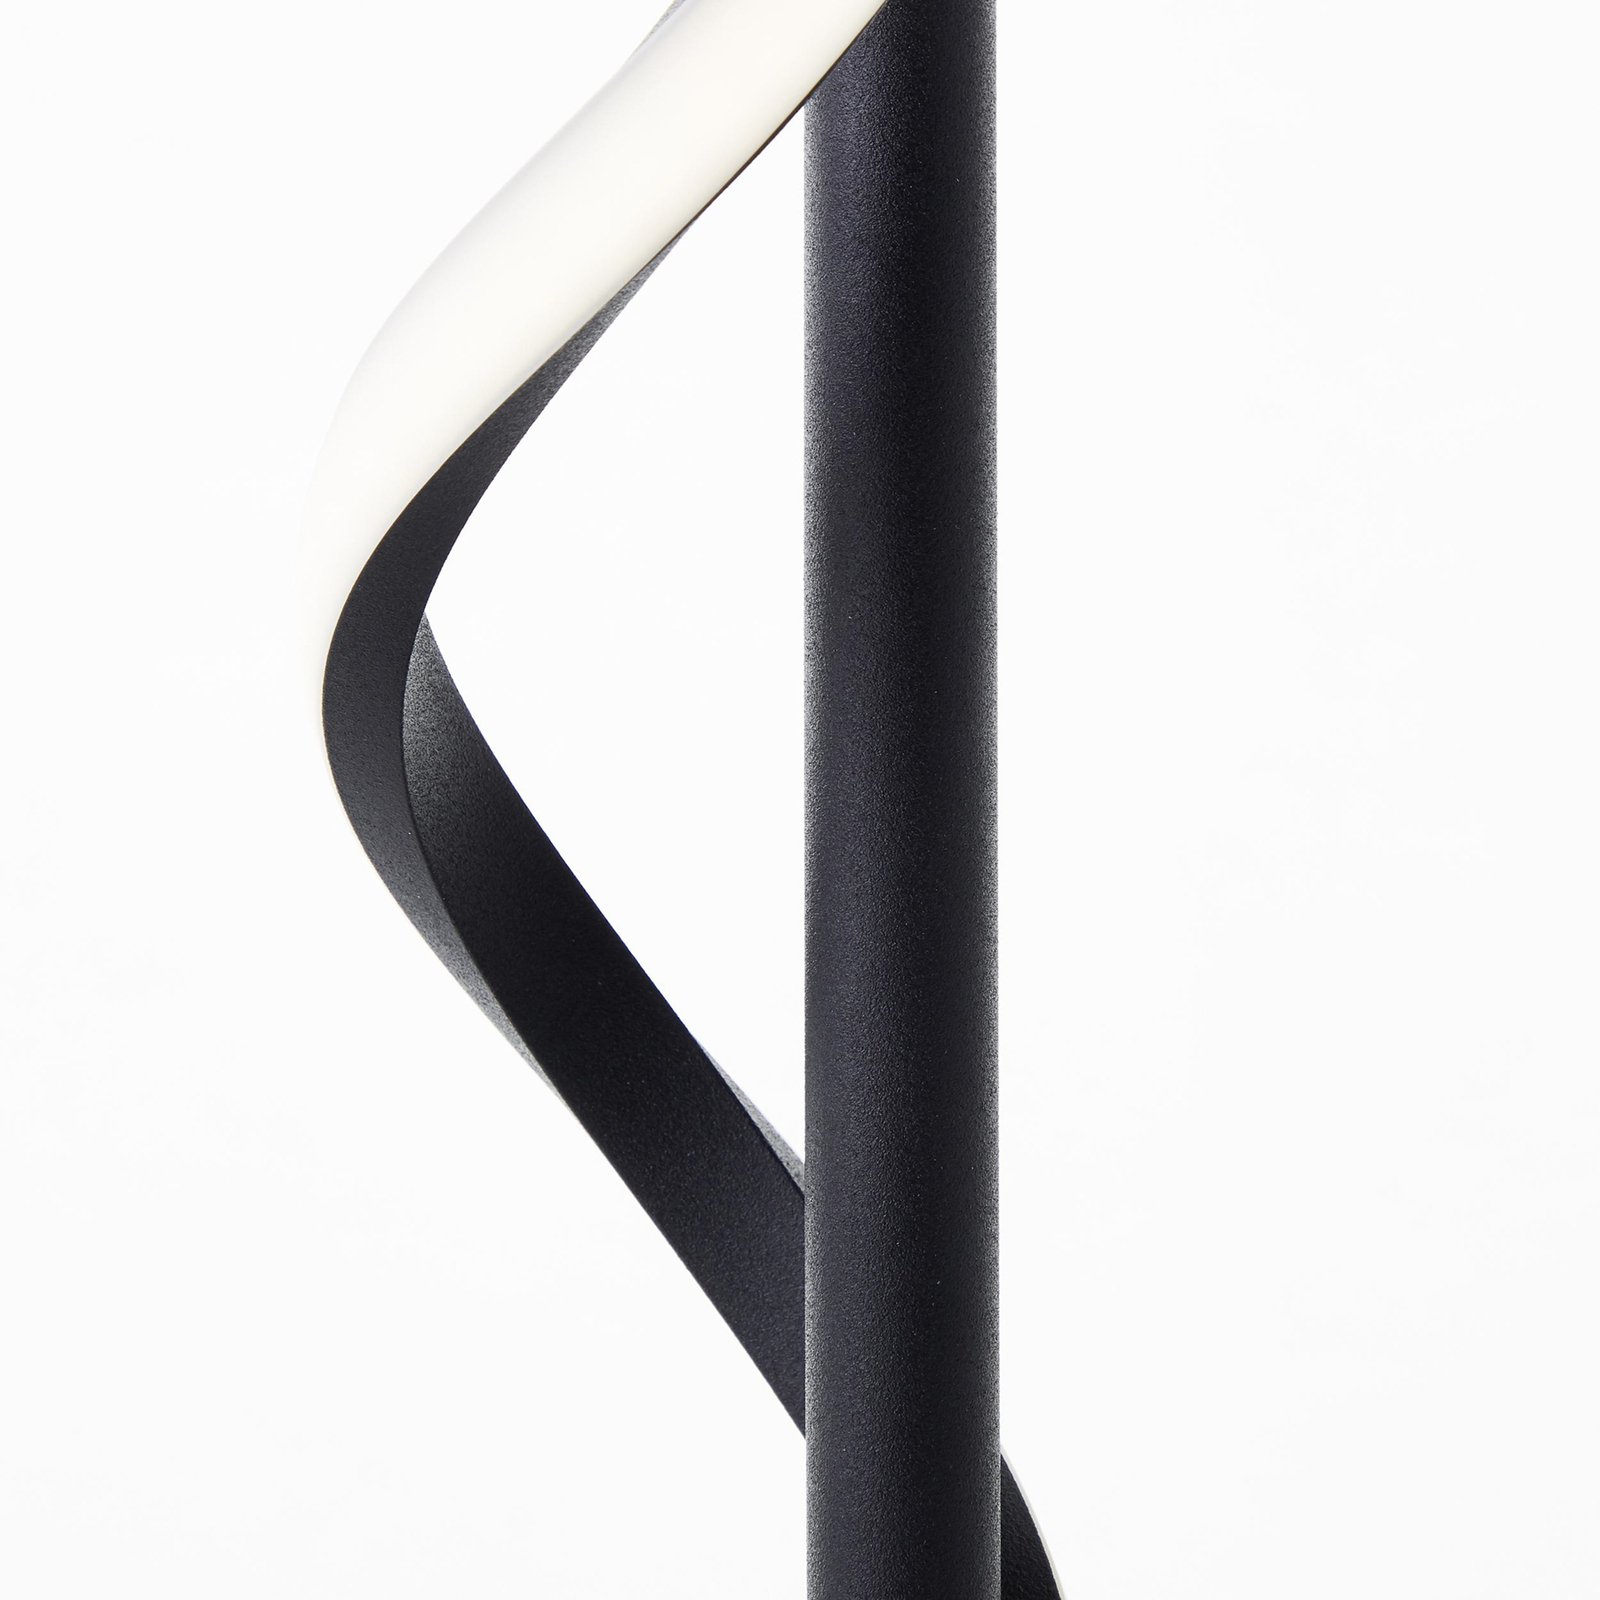 Eunice LED tafellamp, hoogte 40 cm, zwart, metaal